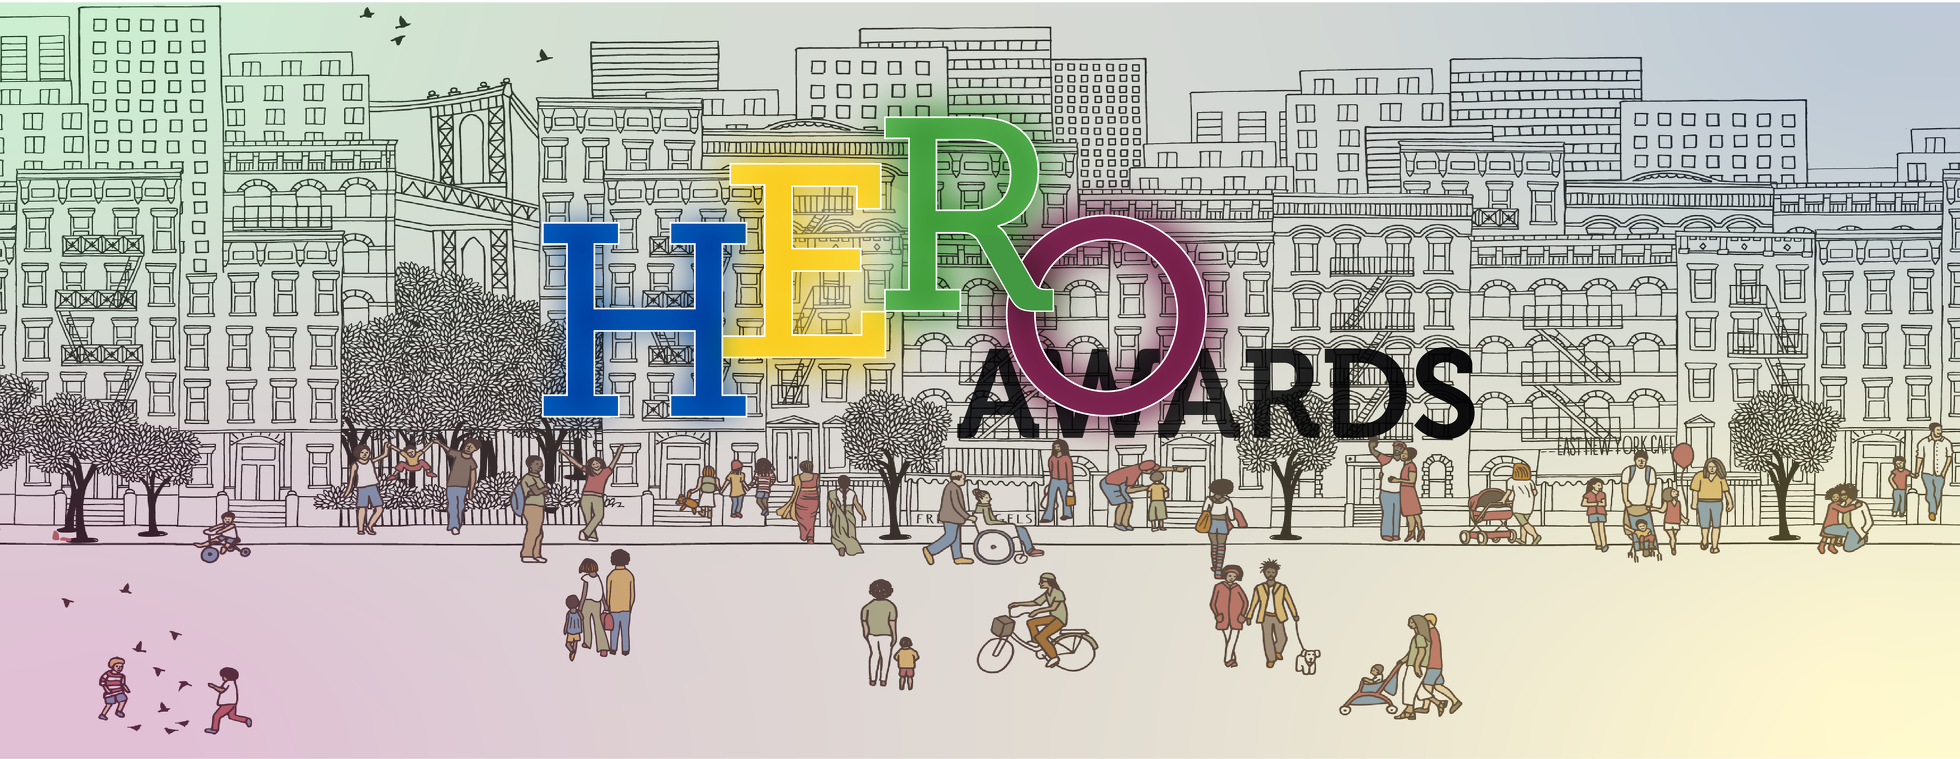 Institute for Community Living Hero Awards Auction